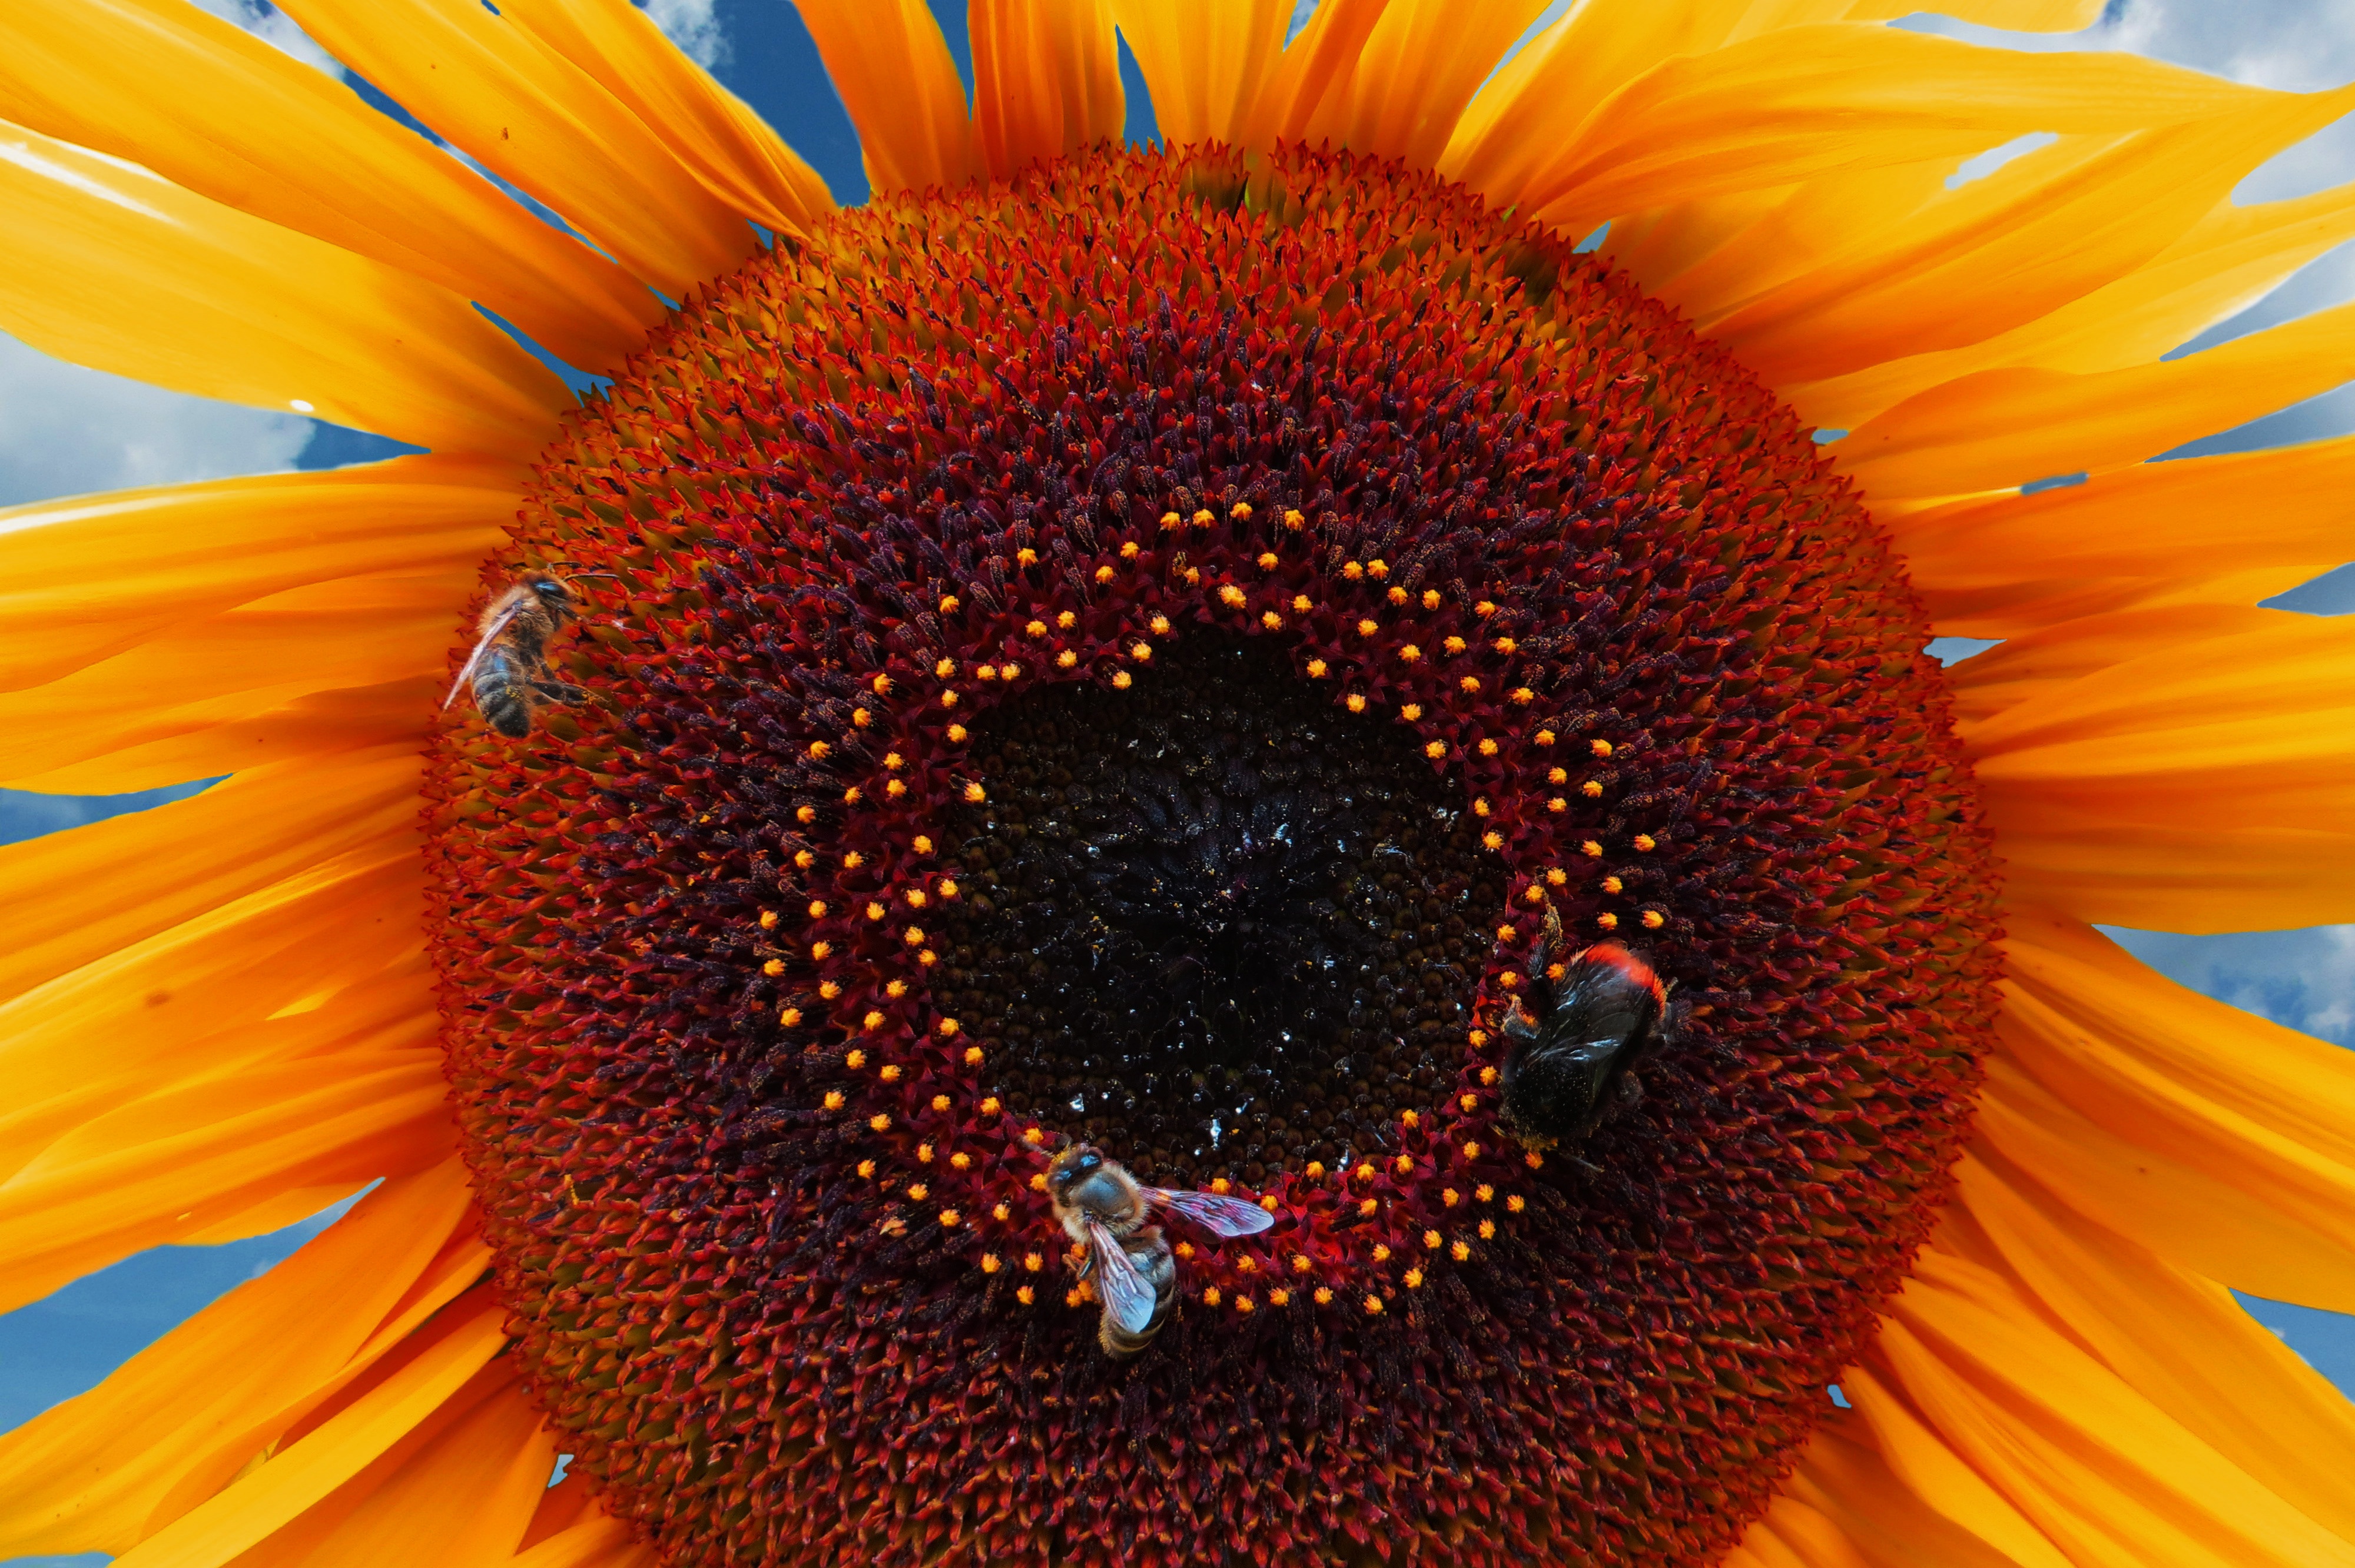 Bee on the sunflower photo